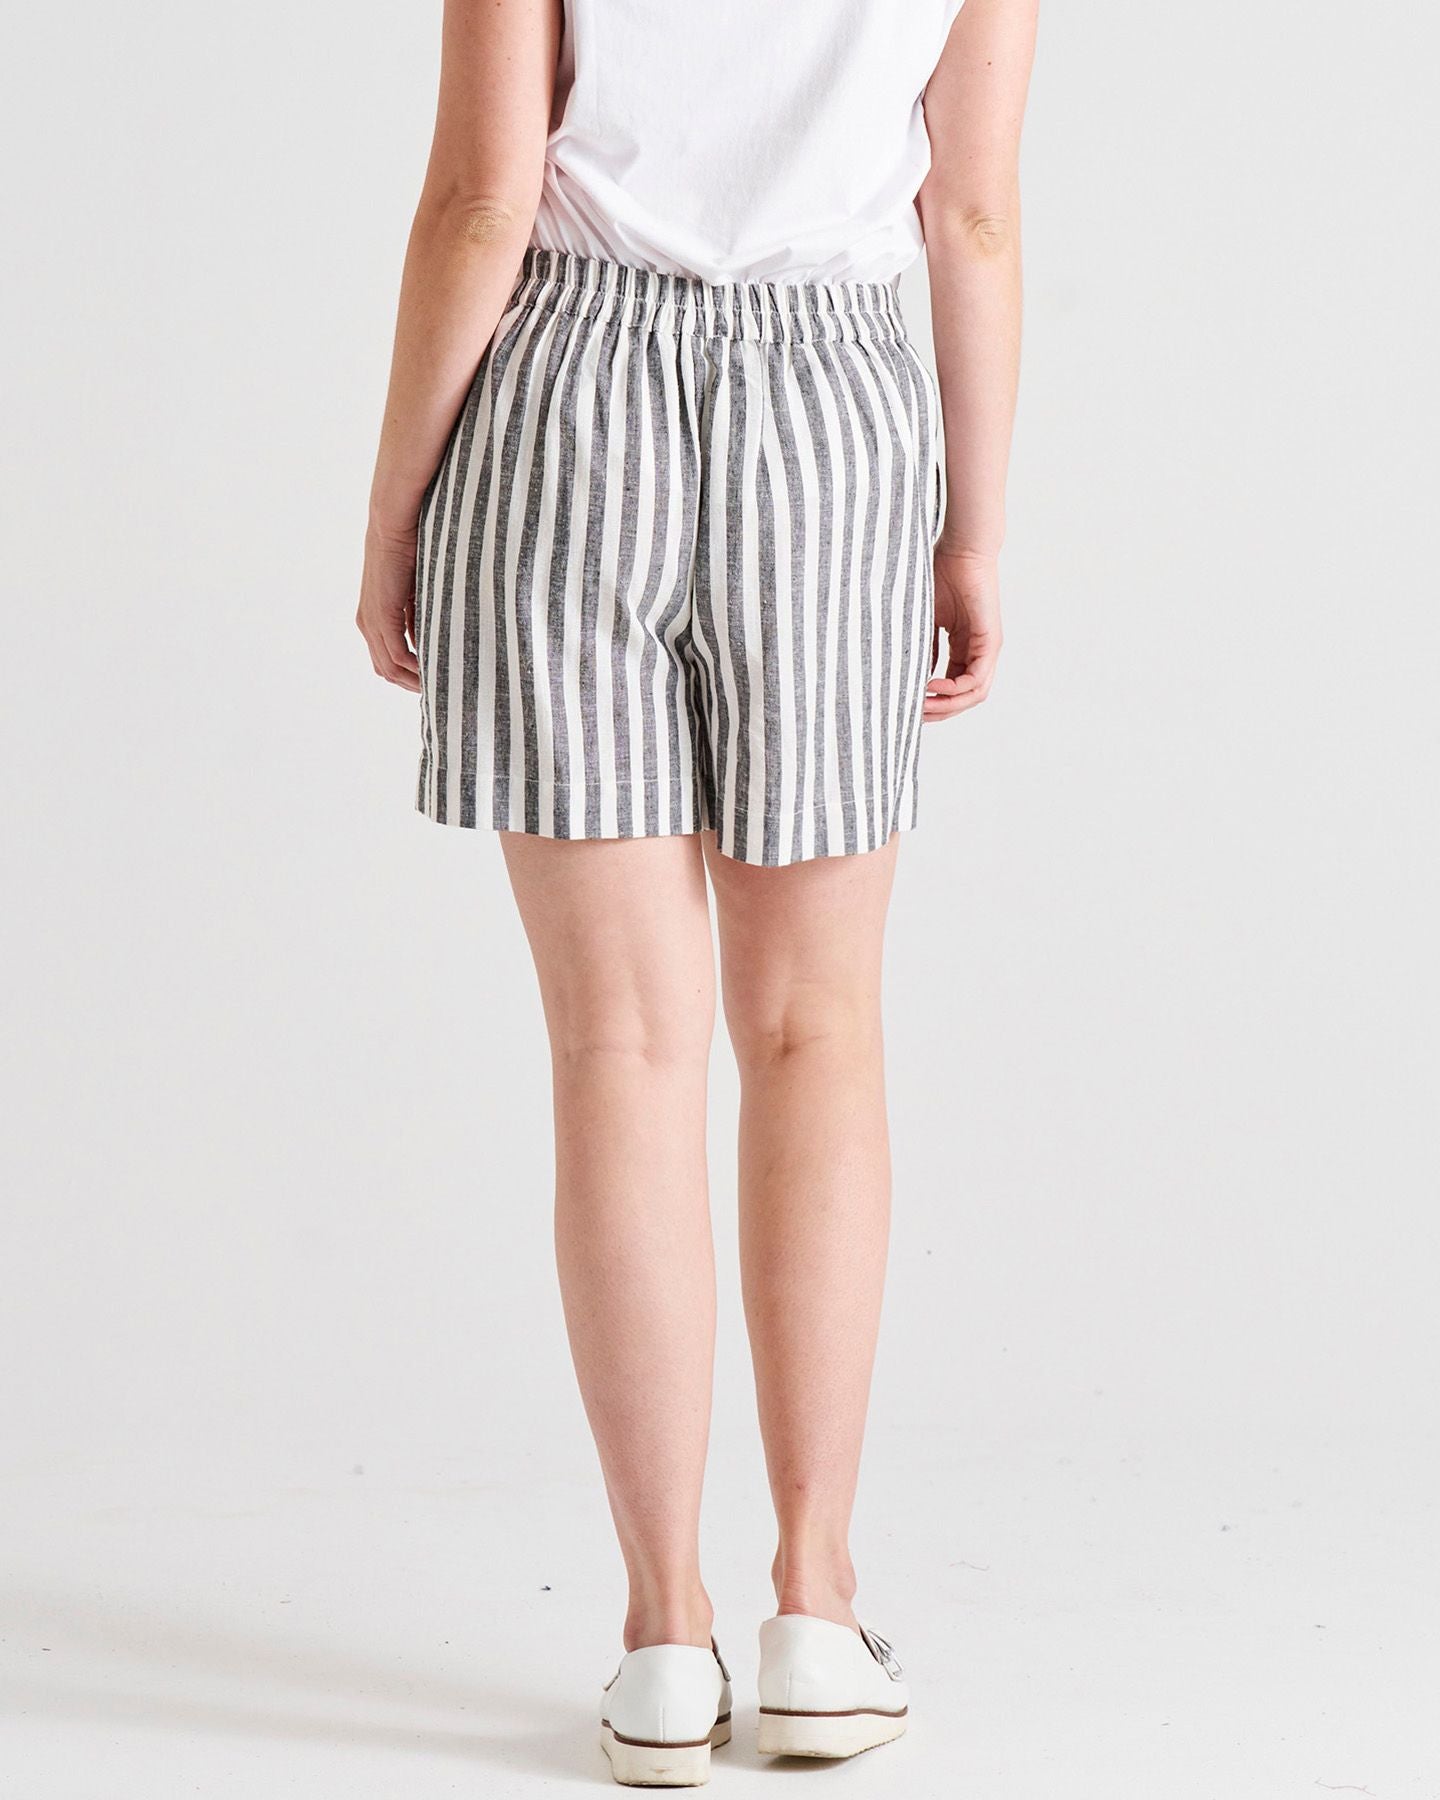 Peyton Shorts - Black/White Stripe